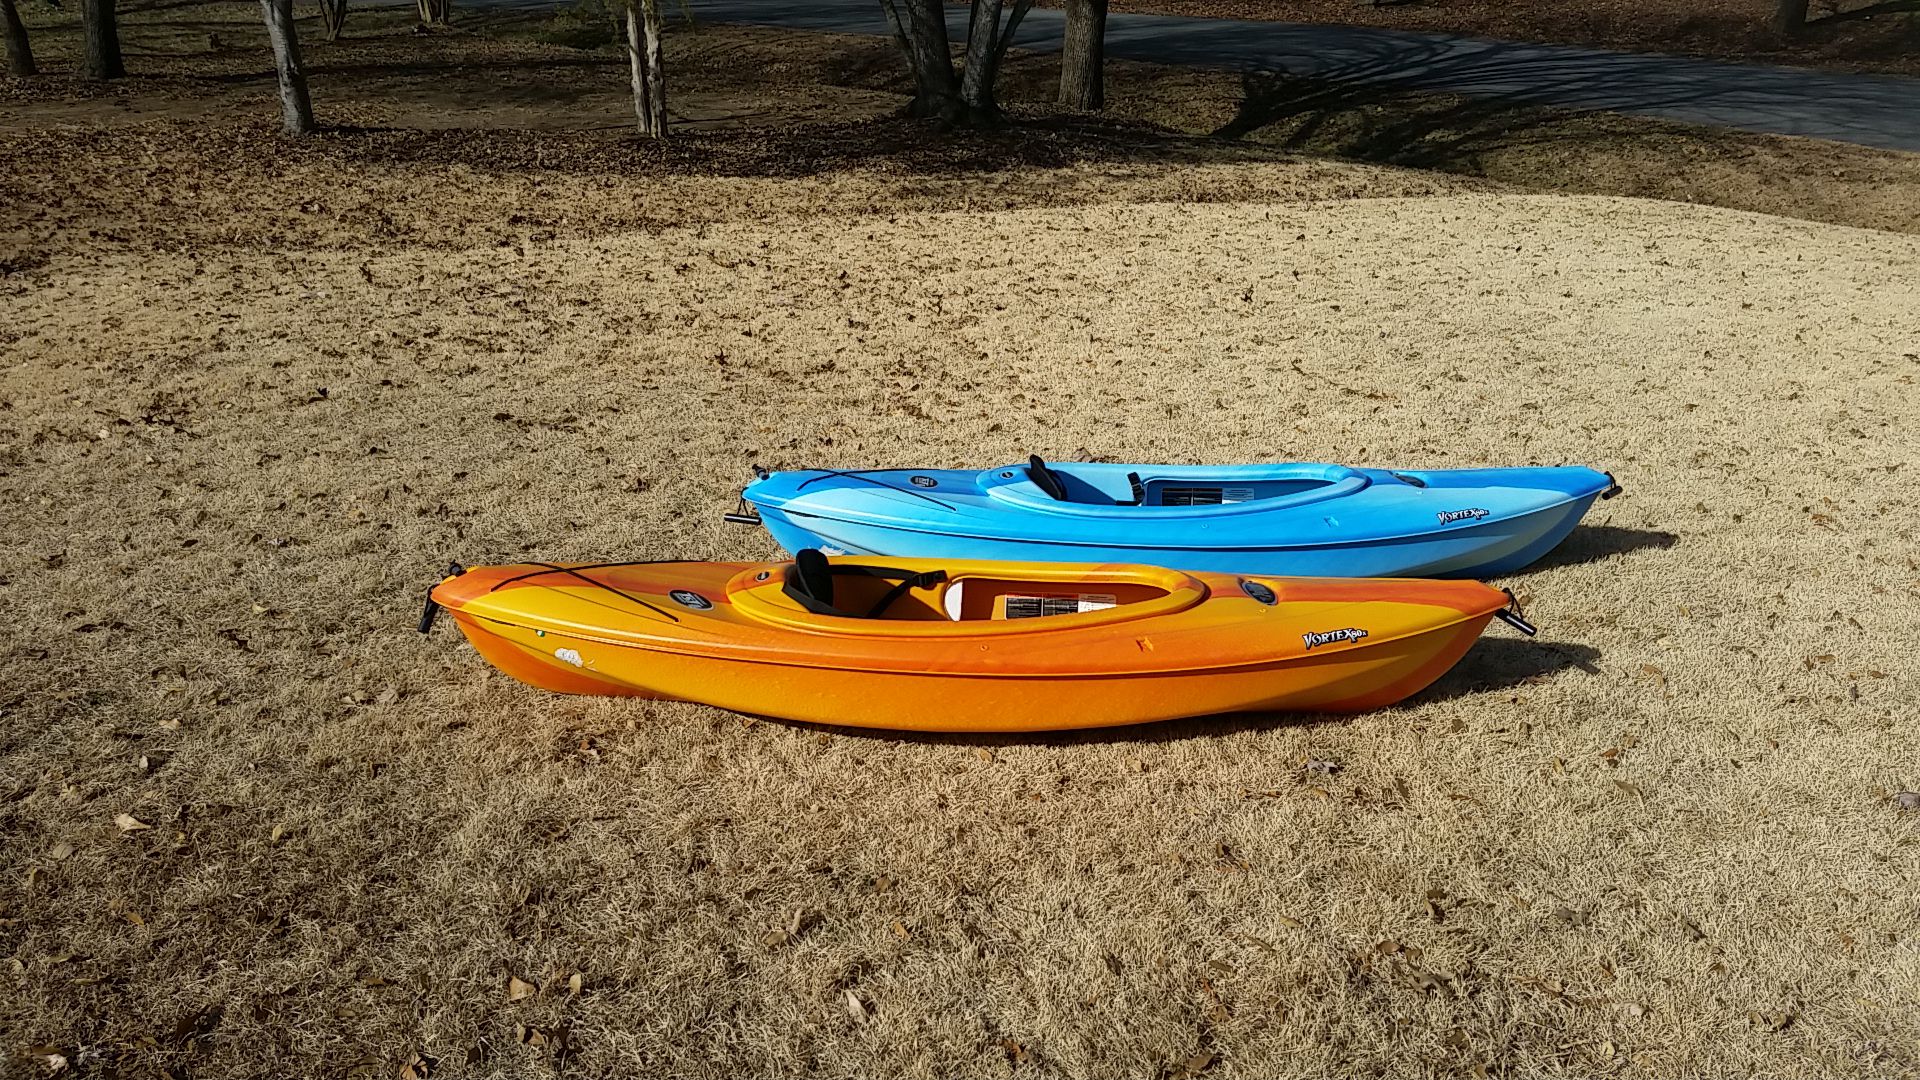 Used Pelican Vortex 80x Kayaks, 1 orange, 1 blue, Single Person